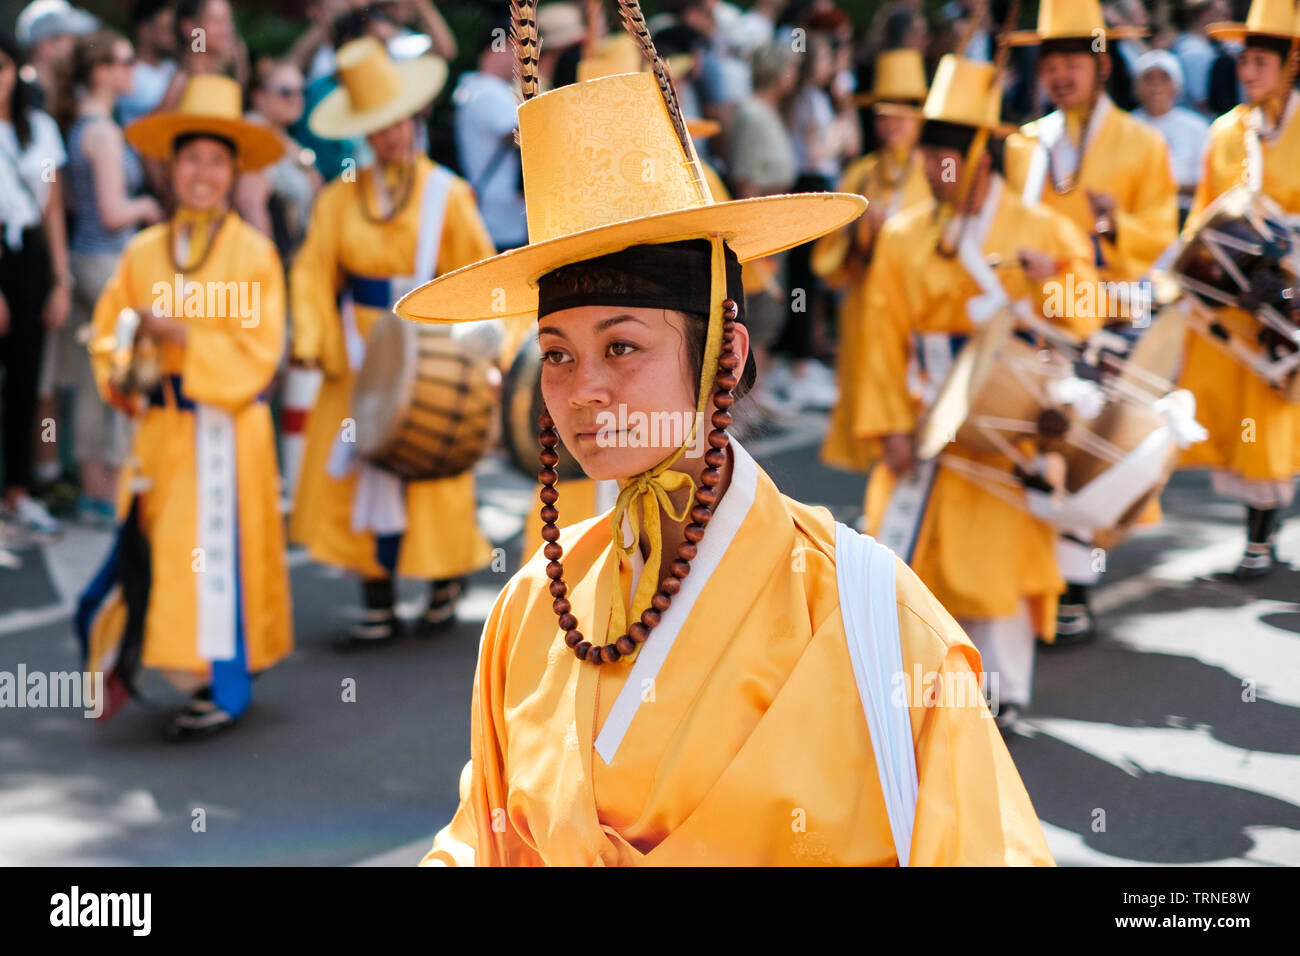 Berlin, Germany - june 2019: Korean people in traditional costumes performing at Karneval der Kulturen (Carnival of Cultures) in Berlin Stock Photo